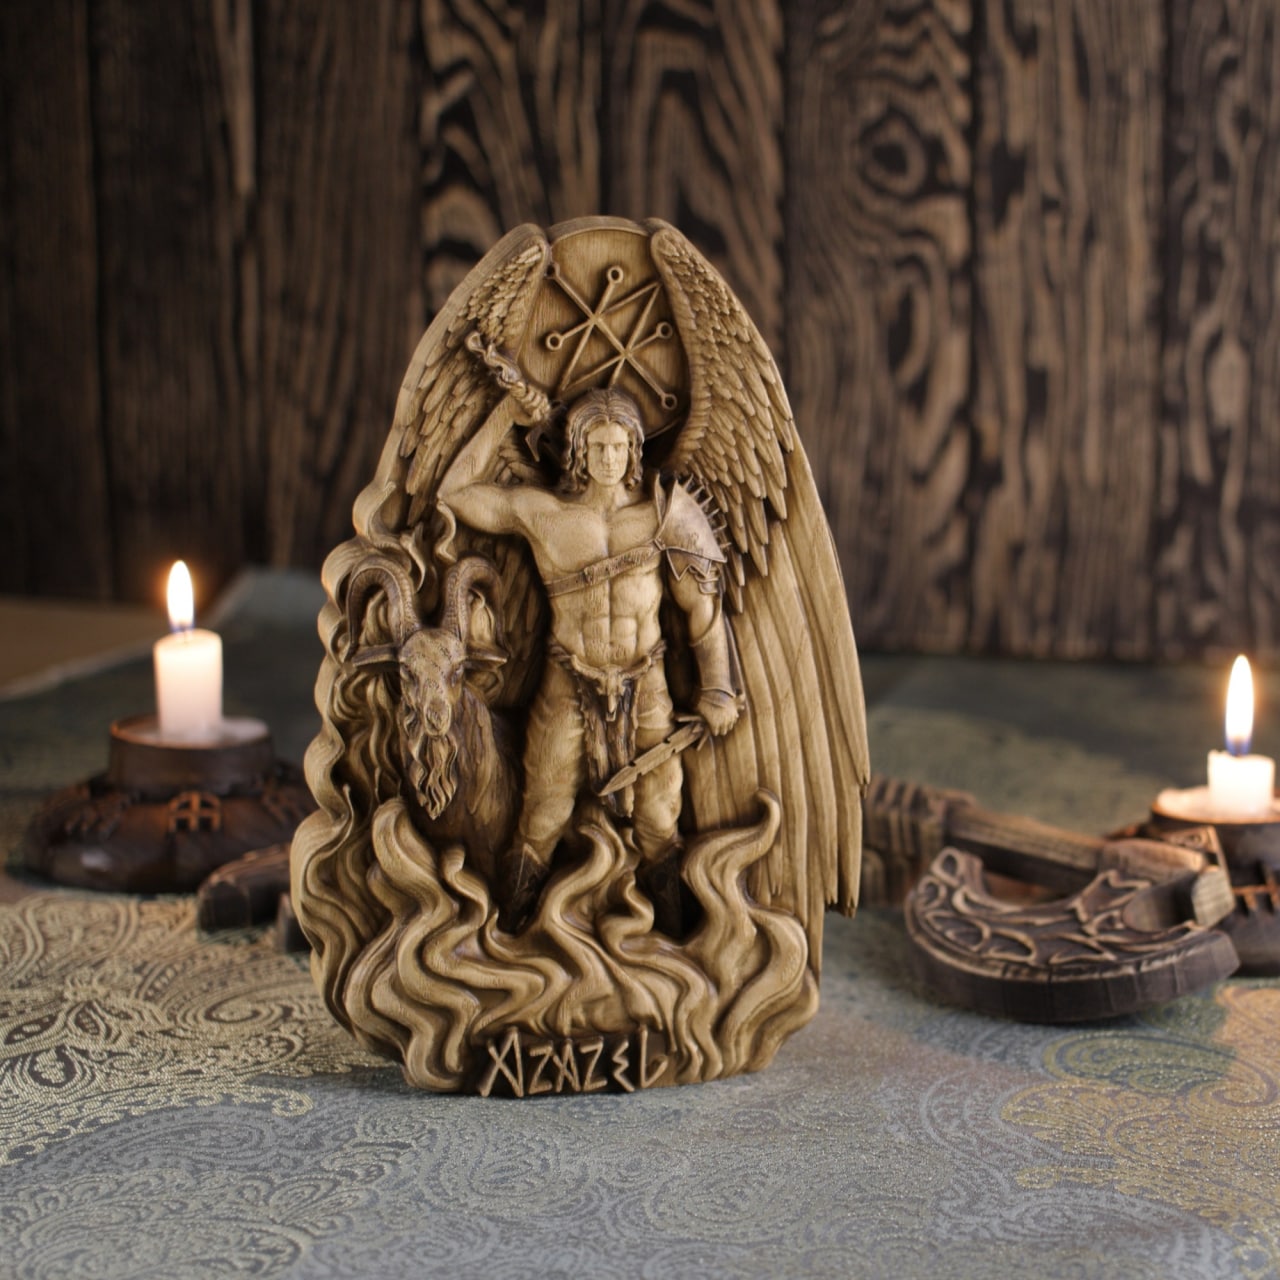 Azazel, demon, Wooden statue